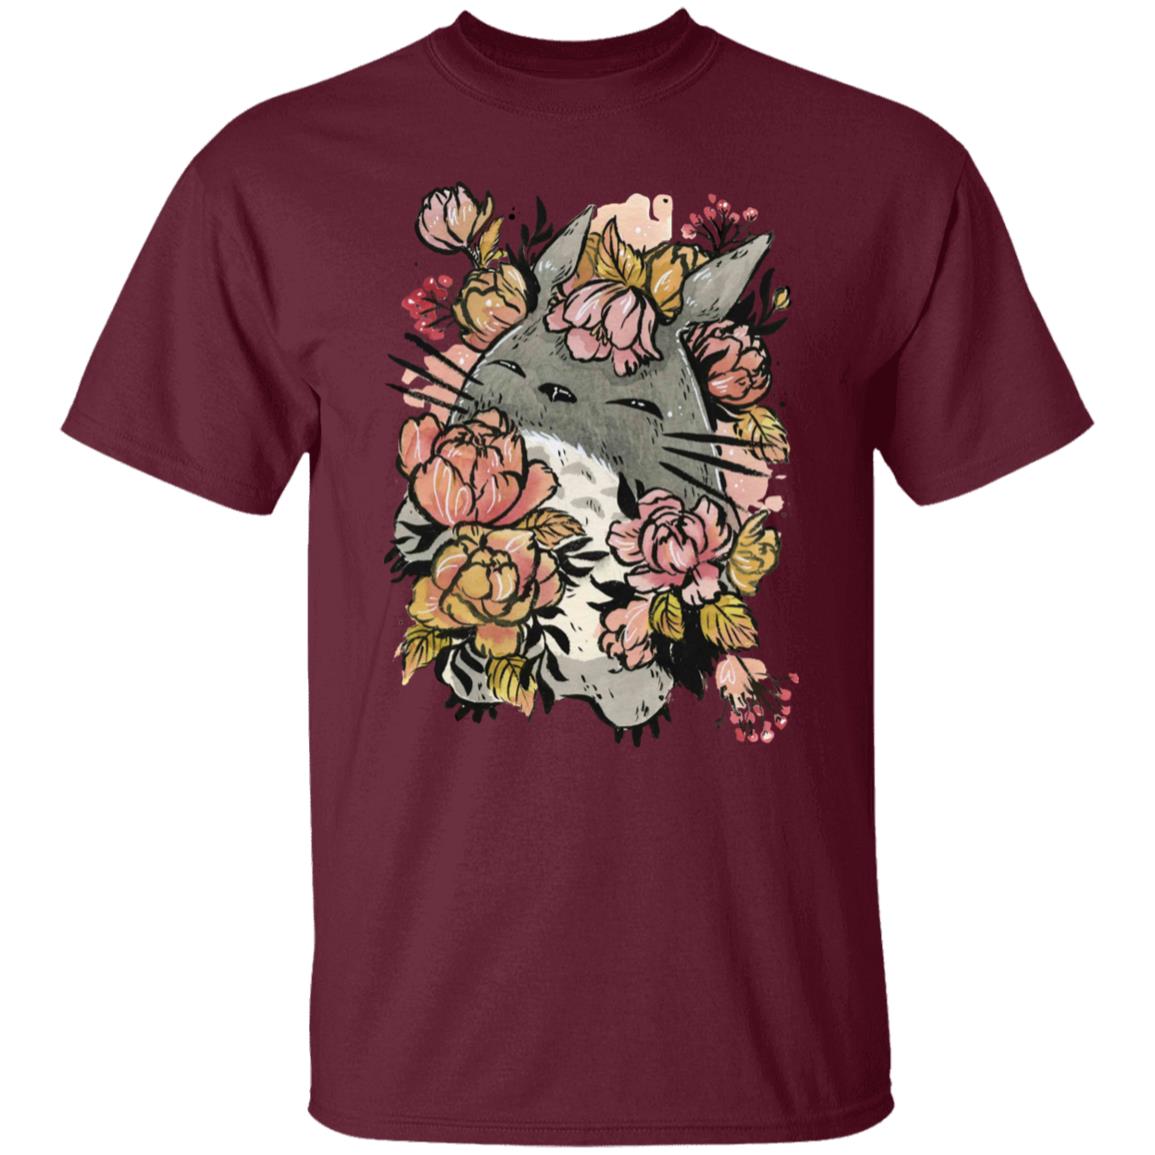 Totoro by the Flowers T Shirt Ghibli Store ghibli.store